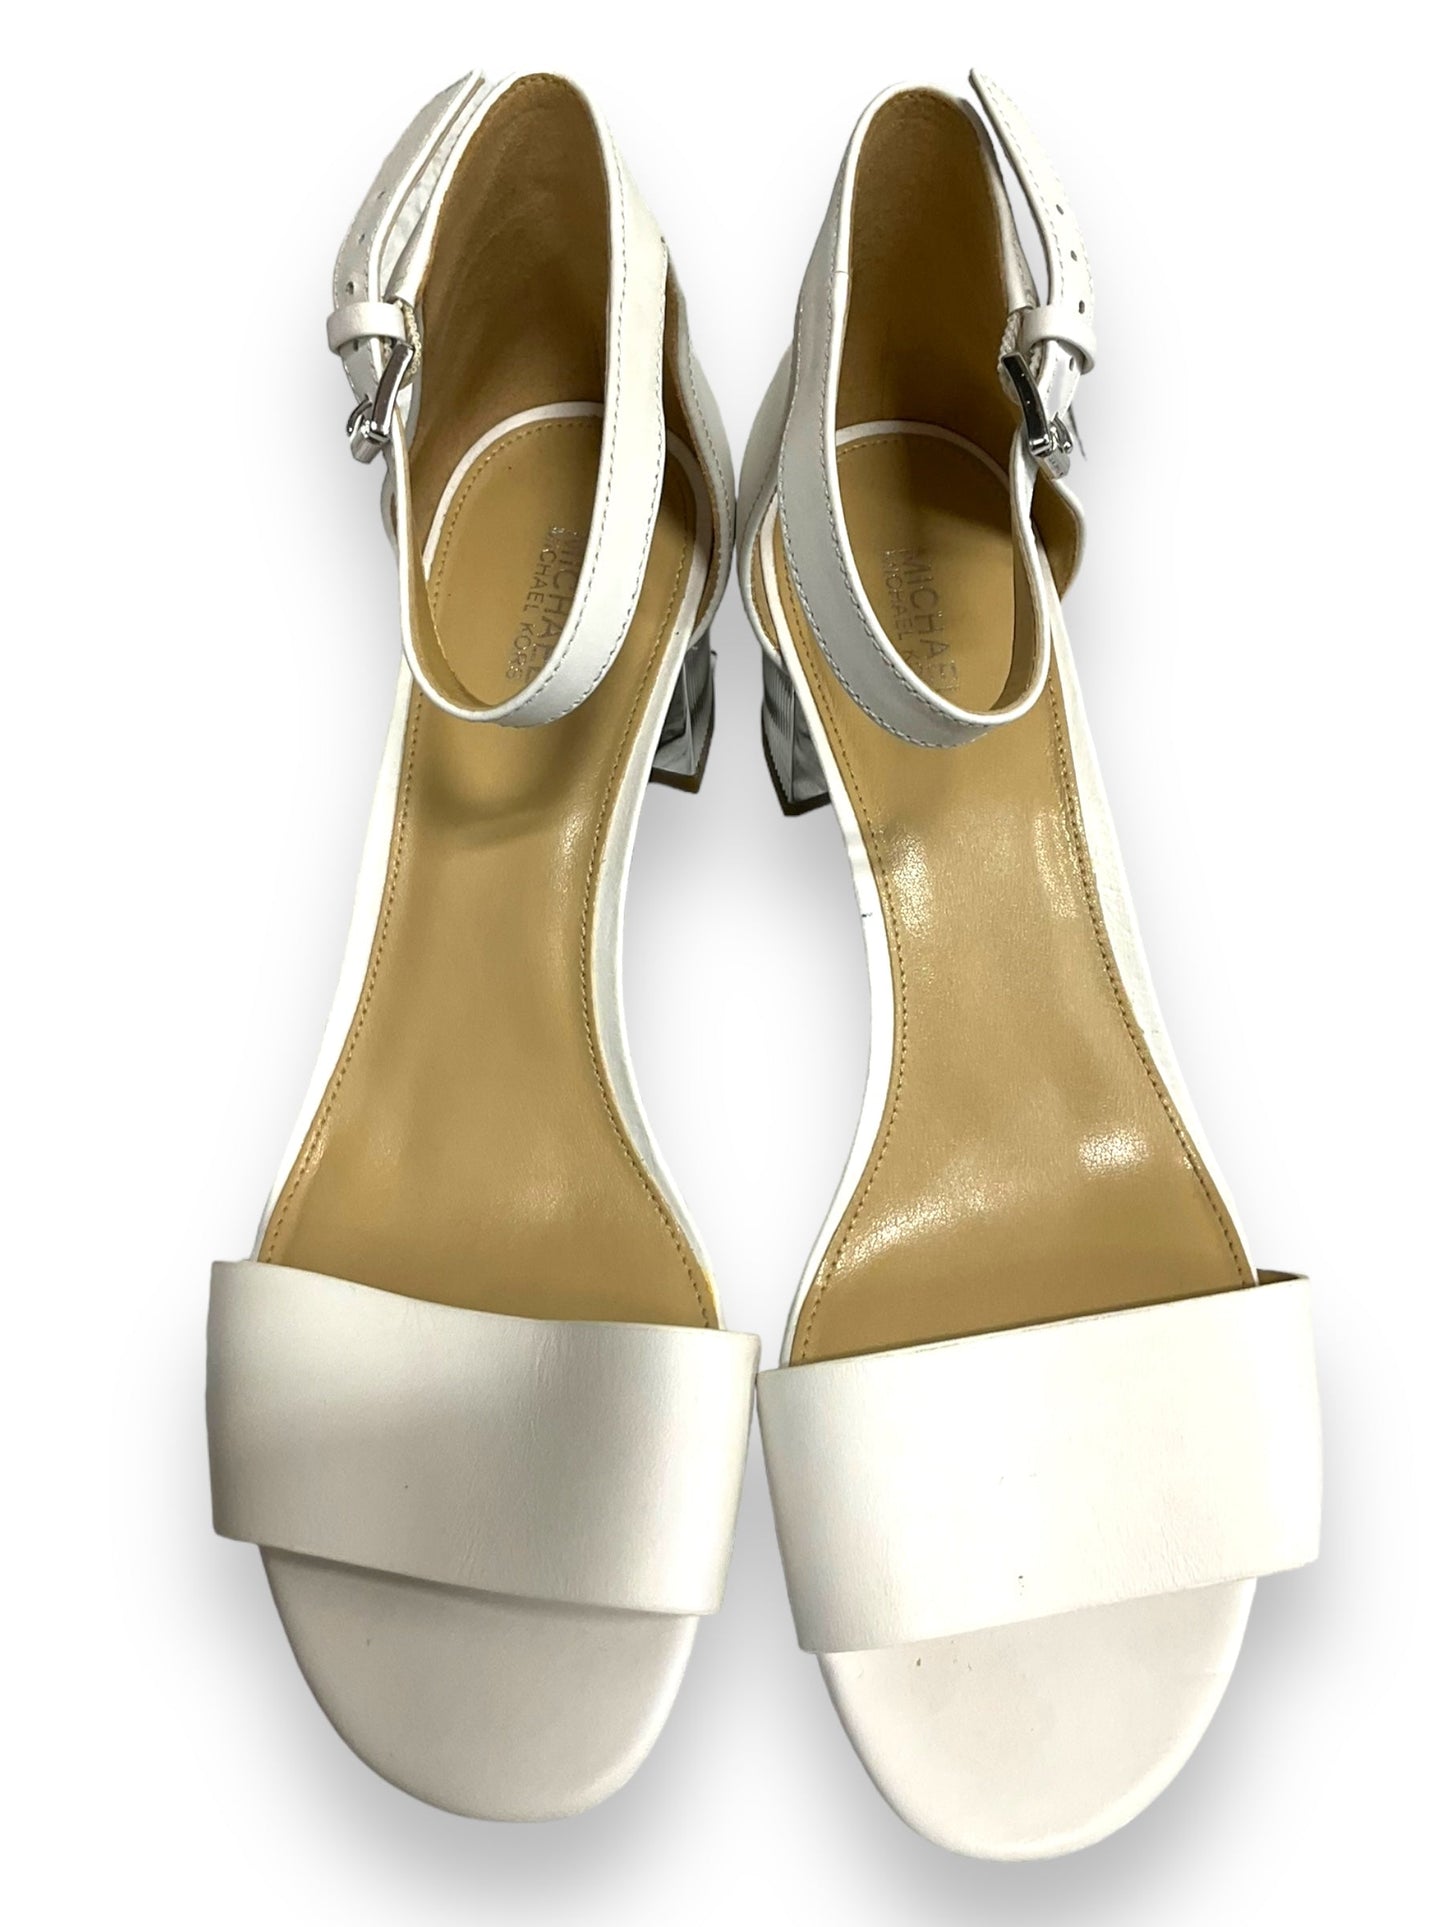 White Shoes Heels Block Michael Kors, Size 9